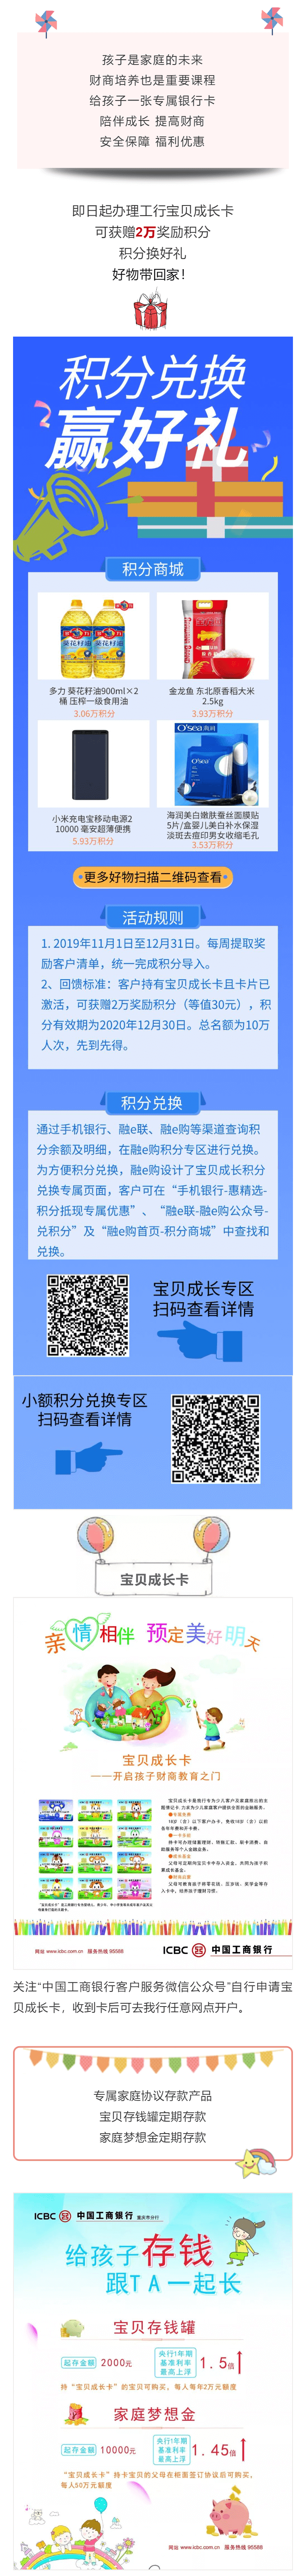 20191114_1207_yiban_screenshot.png